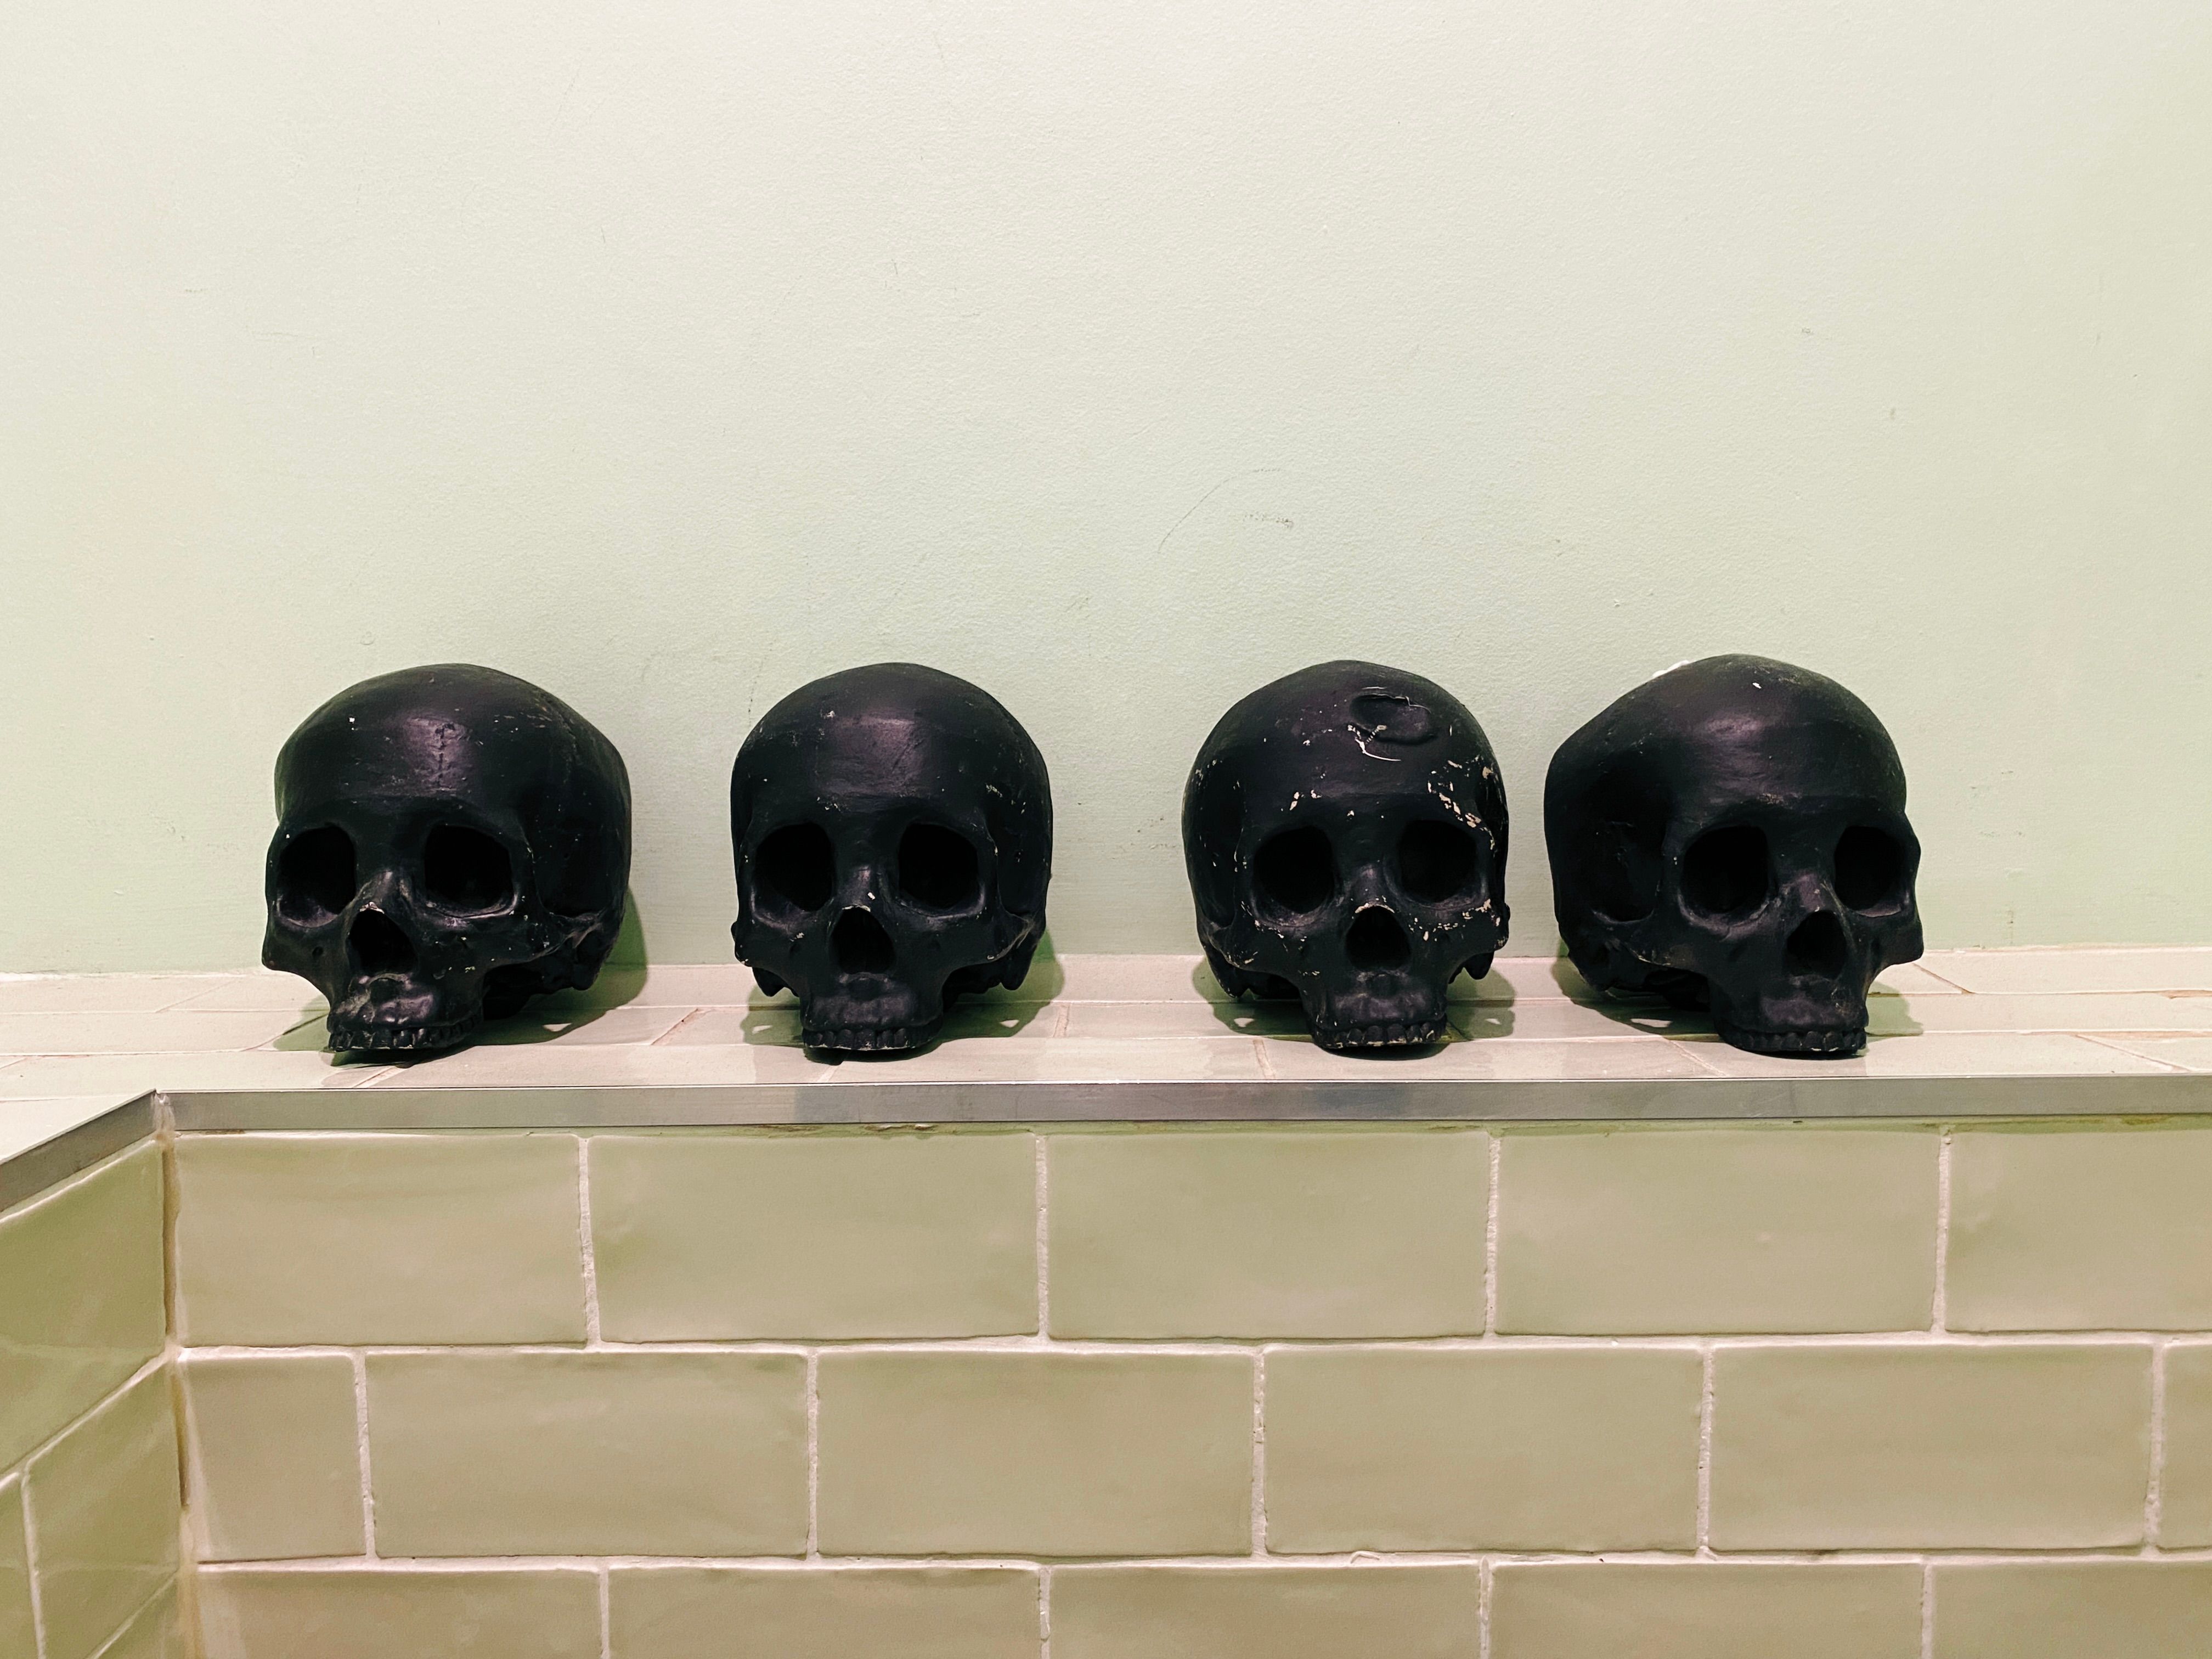 Four black plastic human skulls sitting on a narrow shelf.